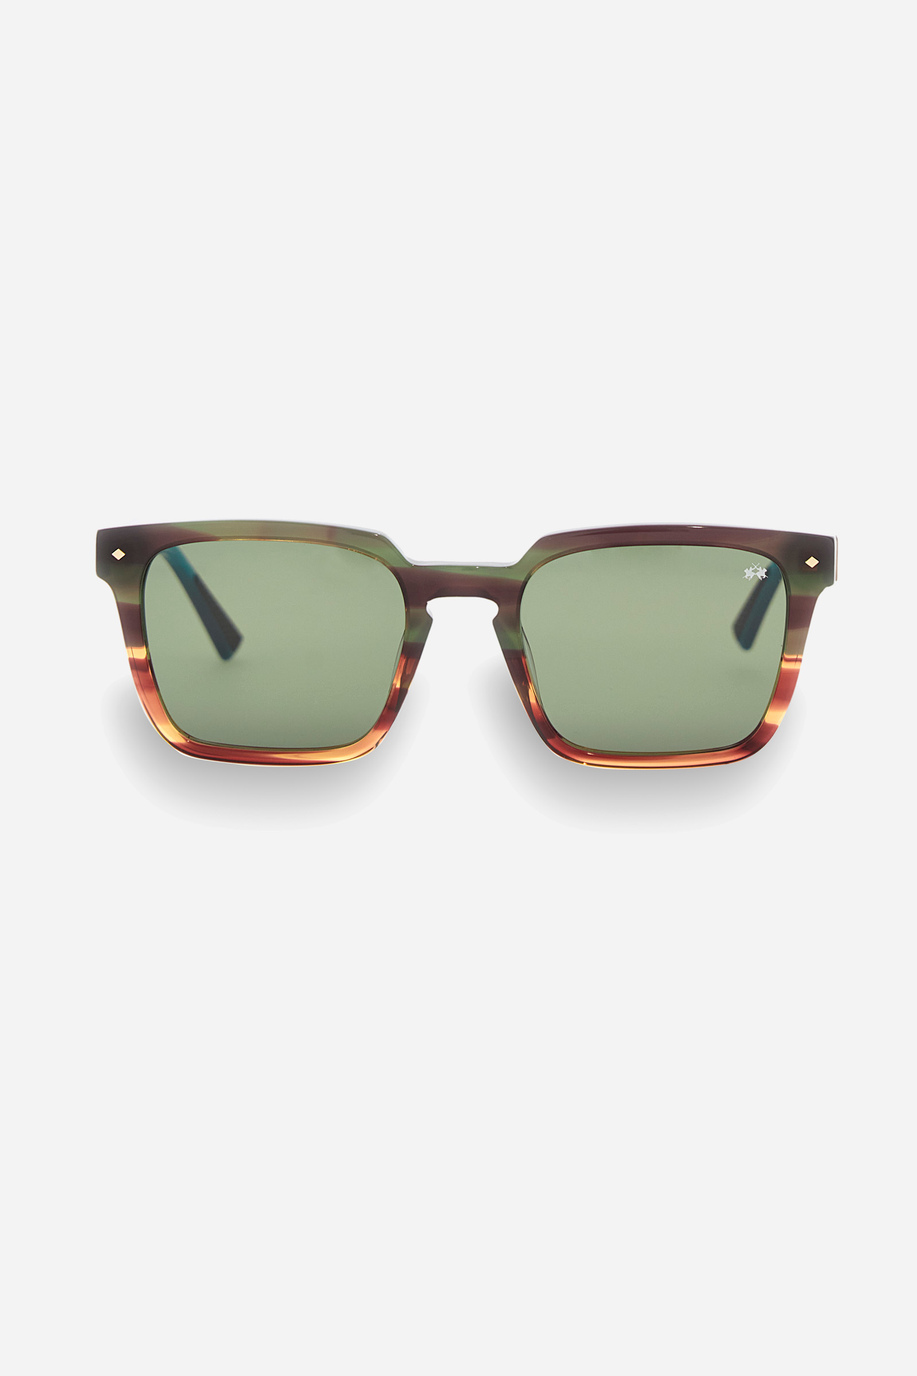 Men’s square sunglasses model - Glasses | La Martina - Official Online Shop